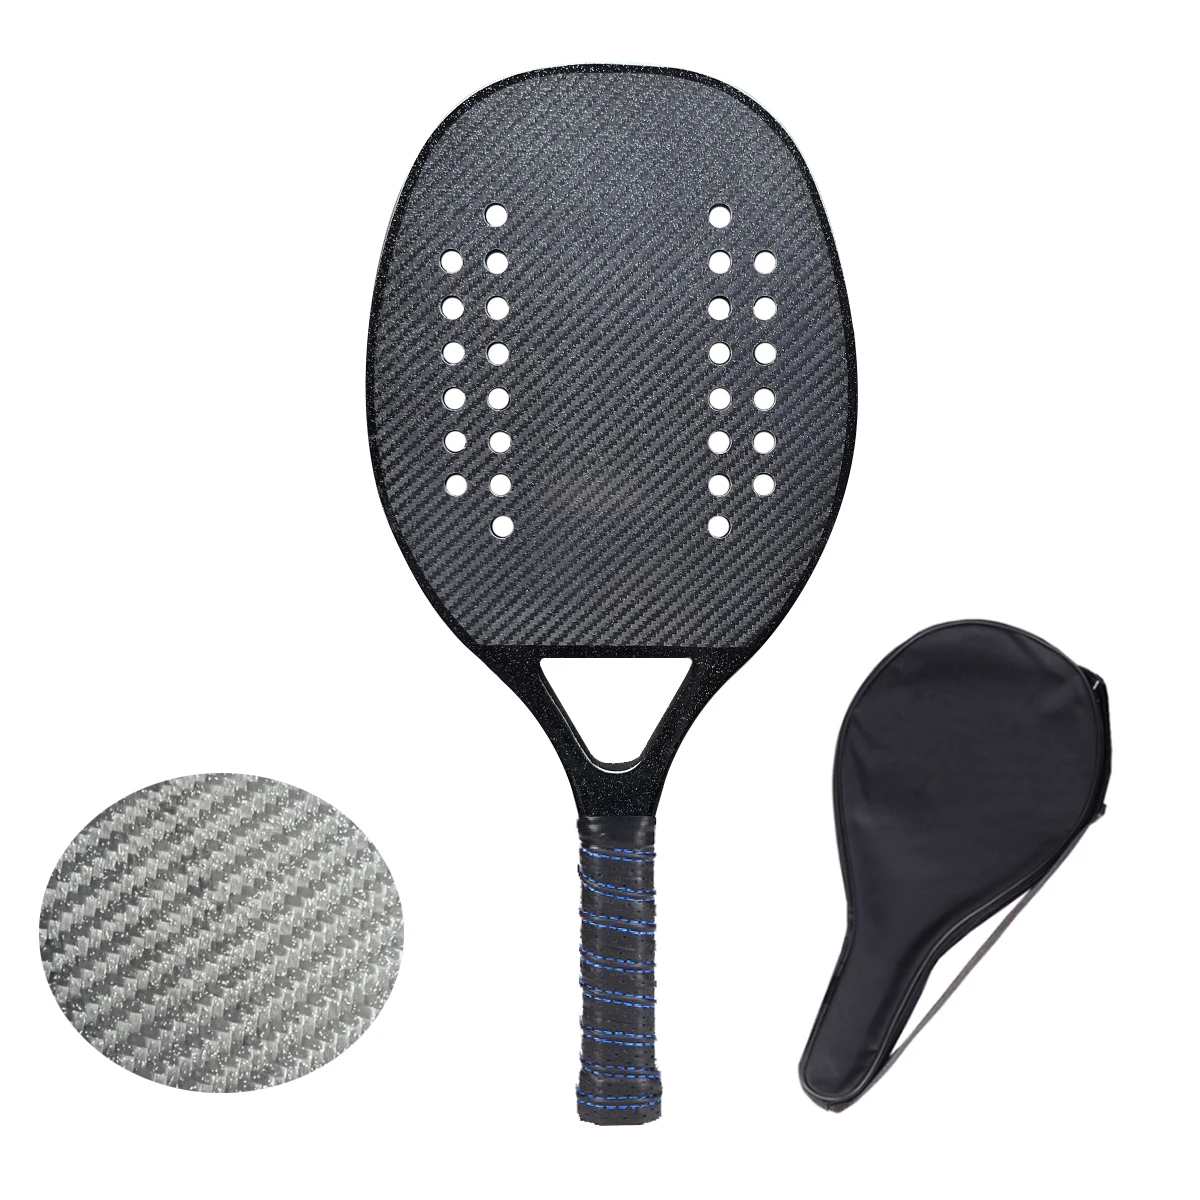 Professional Full Carbon Fiber 3K Beach Tennis Racket High Quality Rough Surface Soft EVA Core with Bag